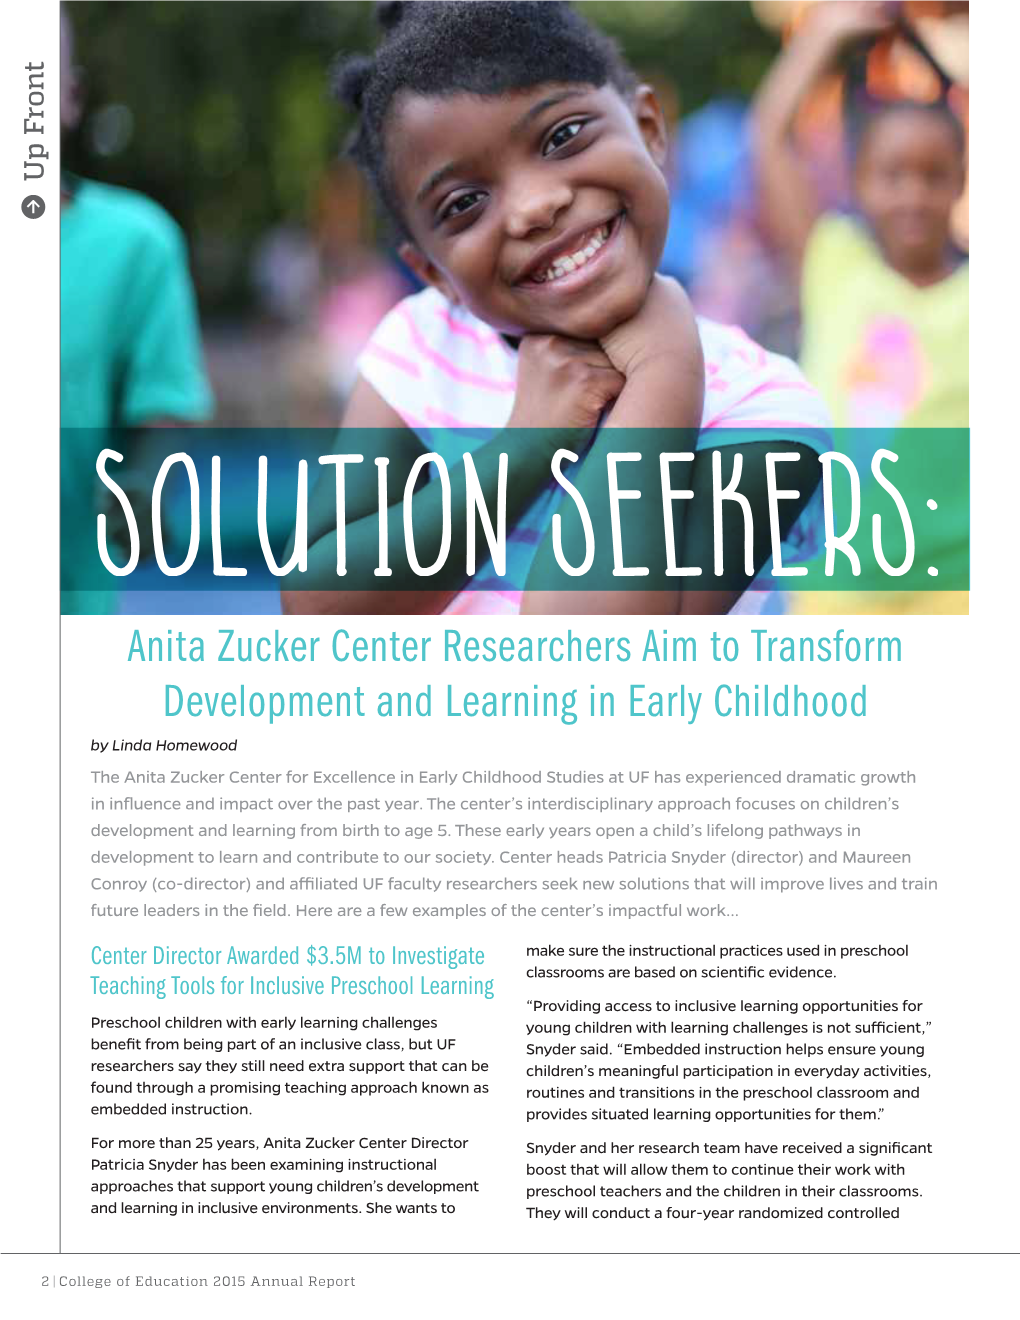 Anita Zucker Center Researchers Aim To